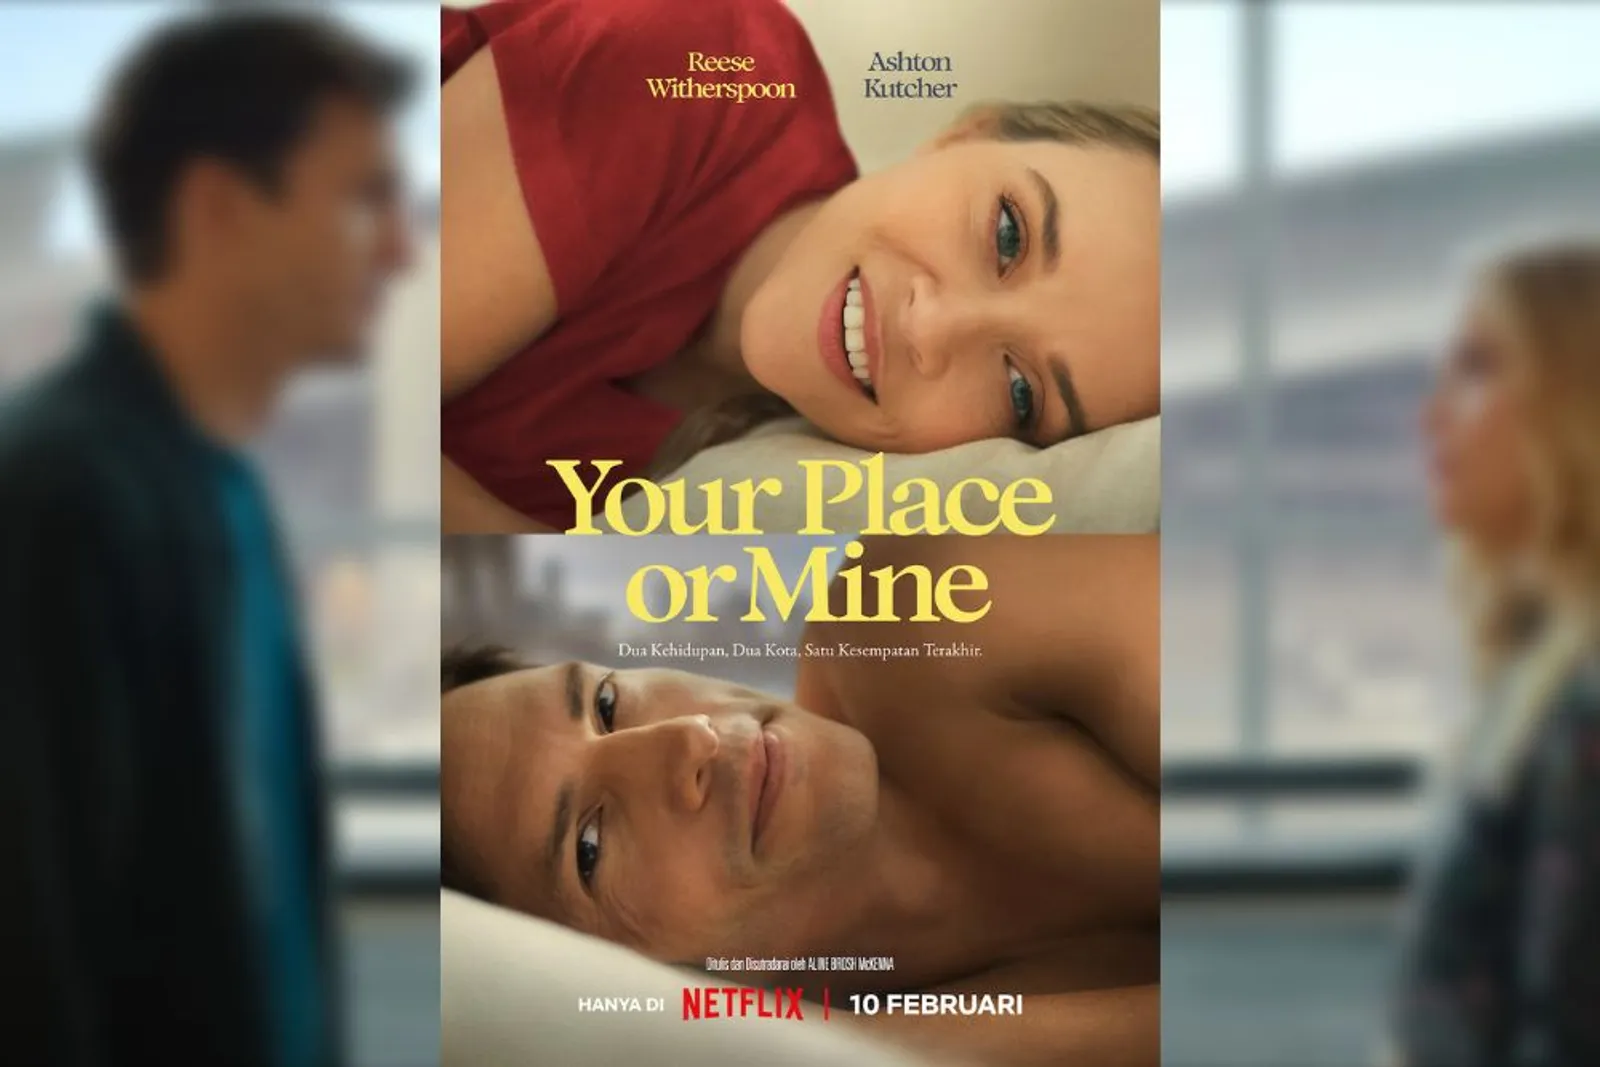 Sambut Valentine lewat Film Komedi Romantis 'Your Place or Mine'